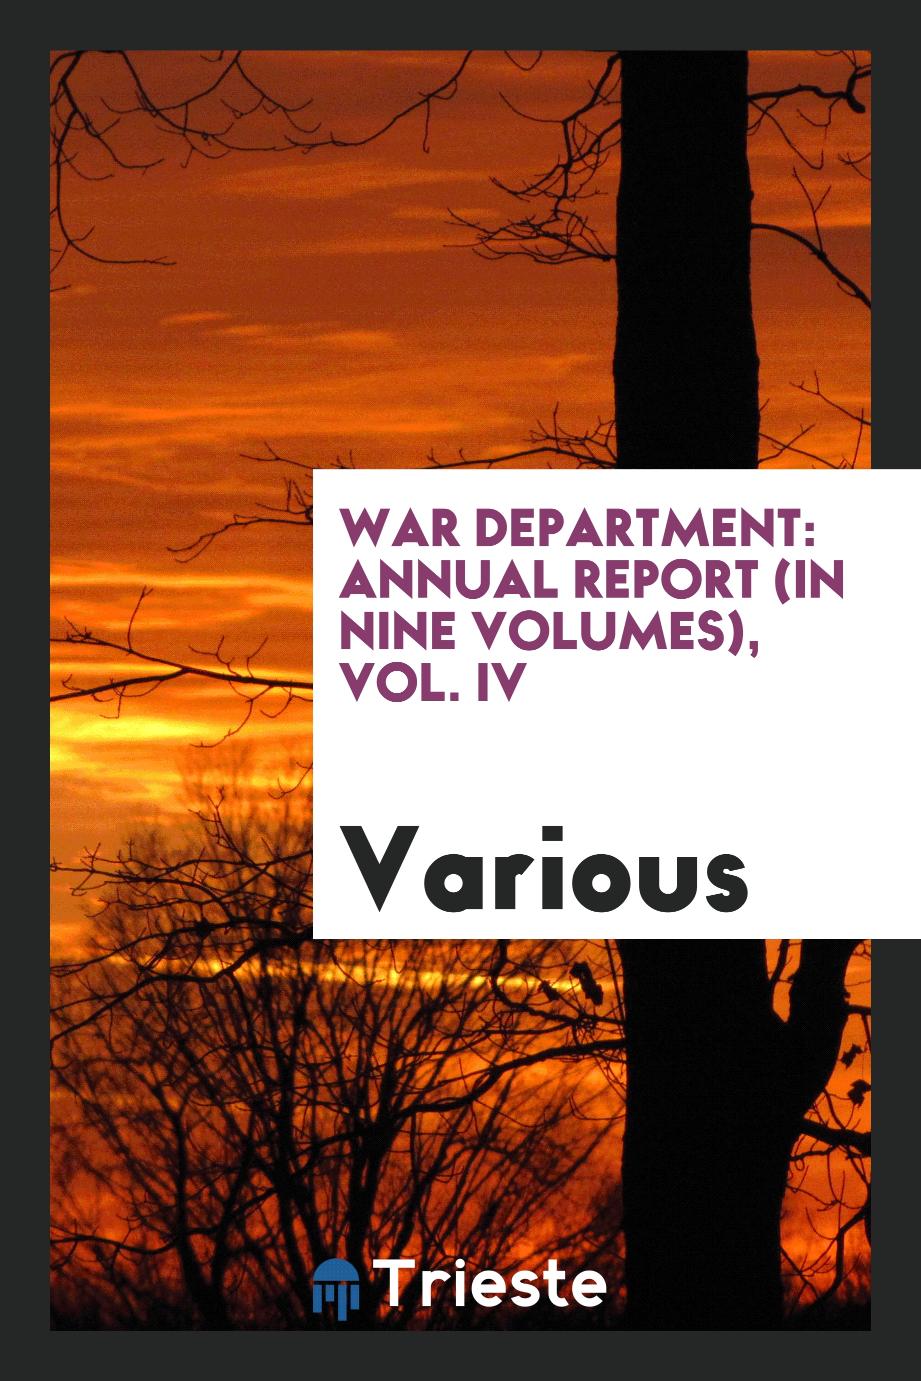 War department: Annual report (in nine volumes), Vol. IV